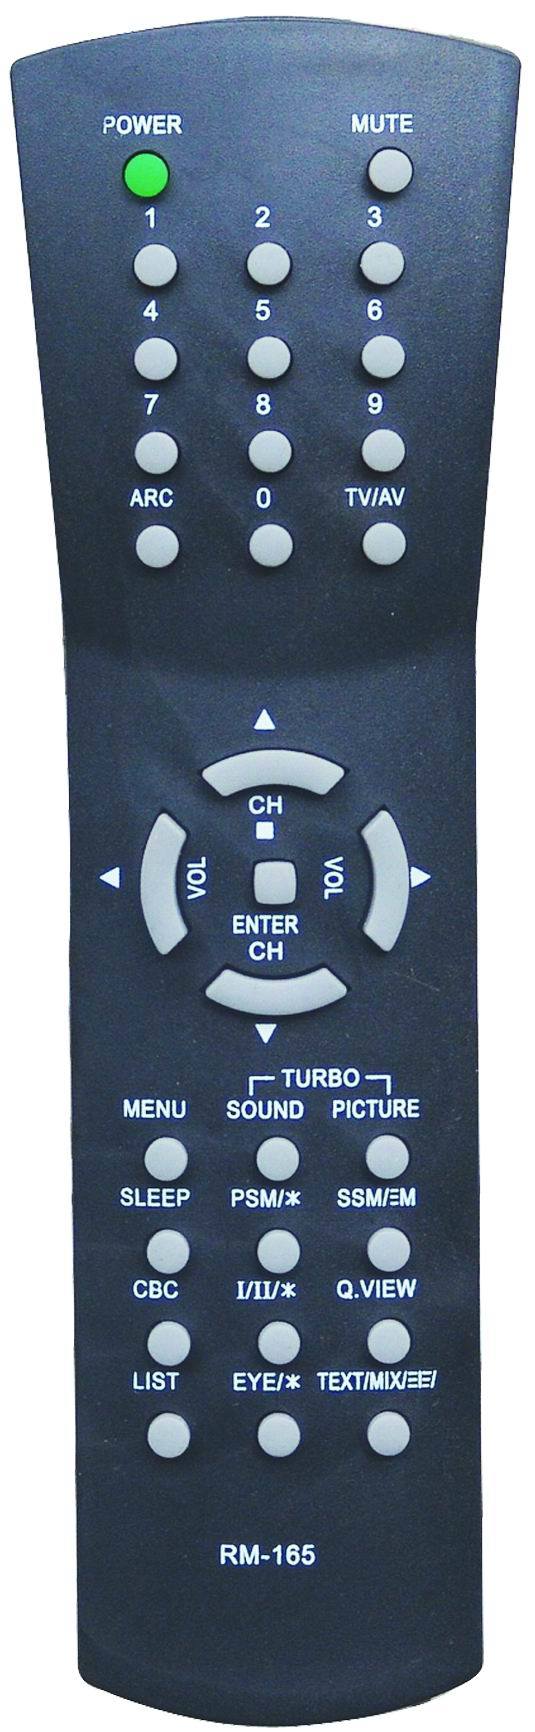 Universal Remote Control Kr -006